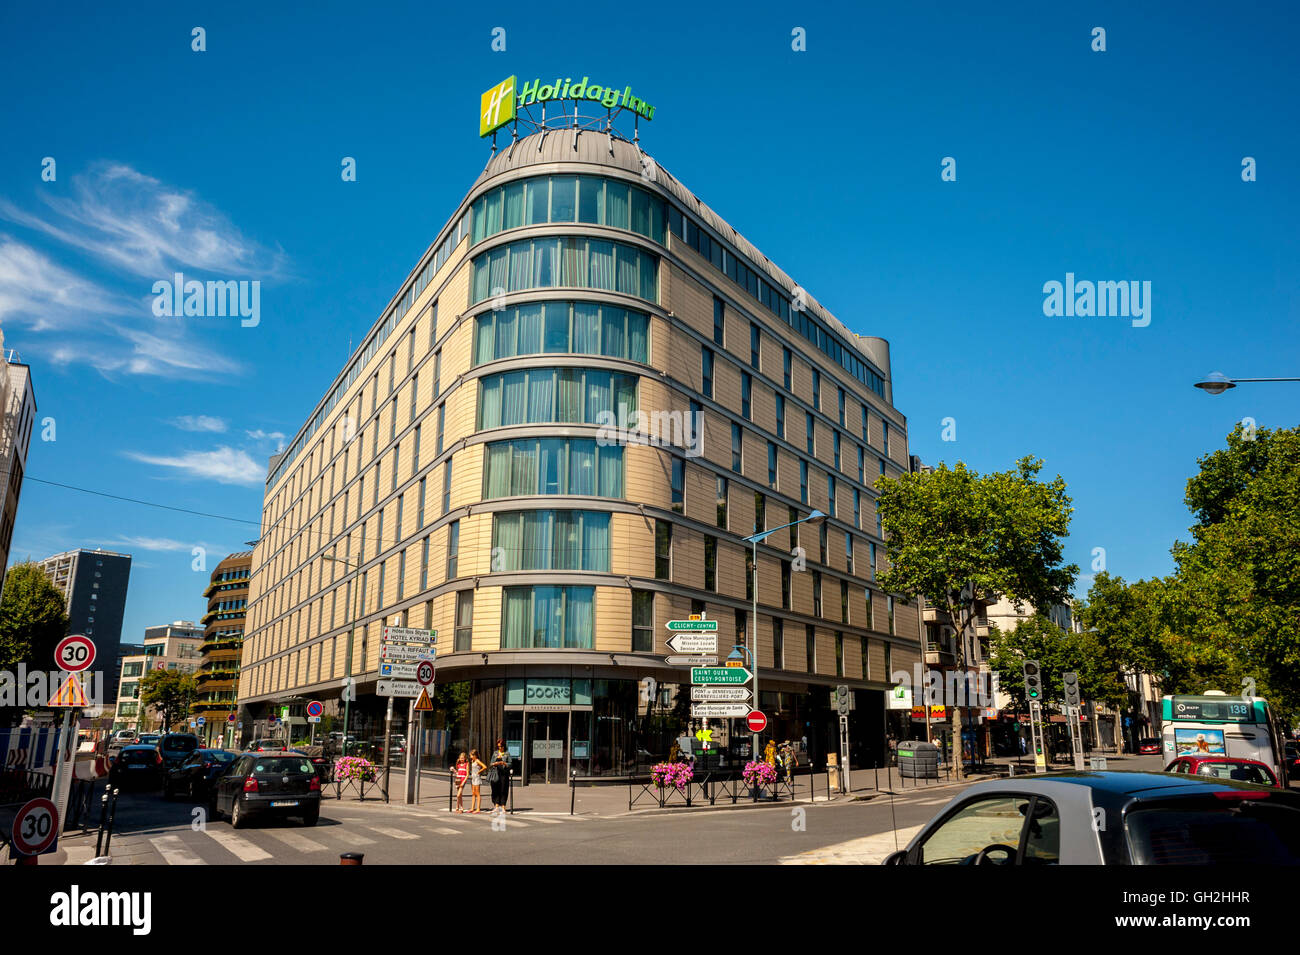 Paris, France, Street Scene, Modern Architecture, Holiday Inn Hotel, Porte  de Clichy (Valode & Pistre Architects) suburban street Stock Photo - Alamy